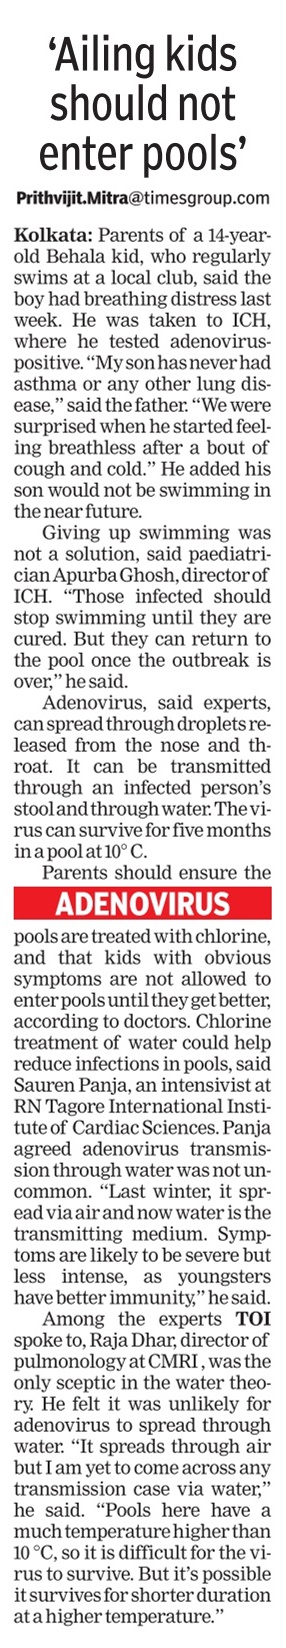 Ailing kids should not enter pools